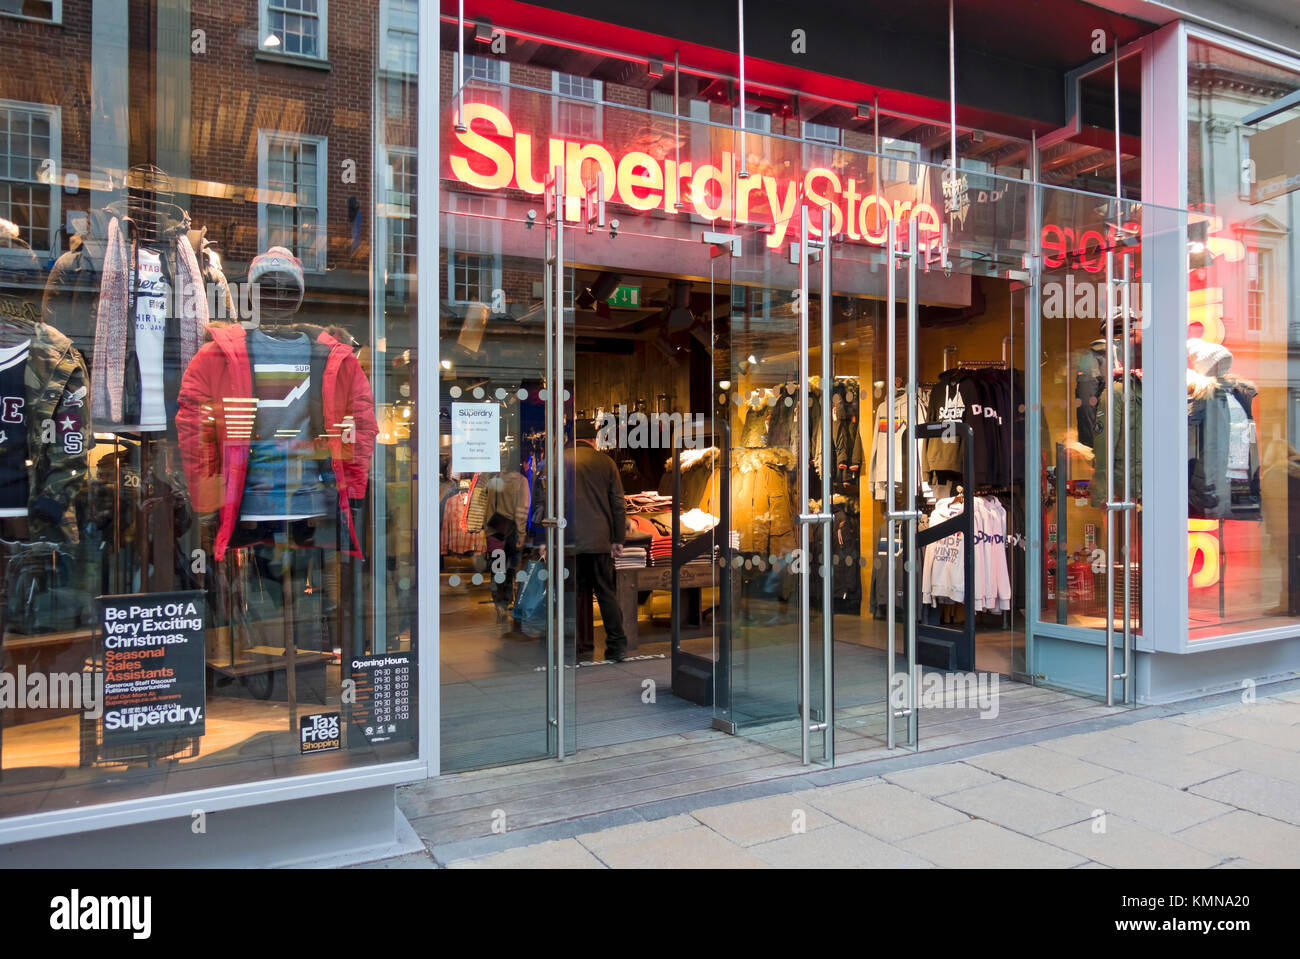 Entrance to Superdry shop store England UK United Kingdom GB Great Britain  Stock Photo - Alamy